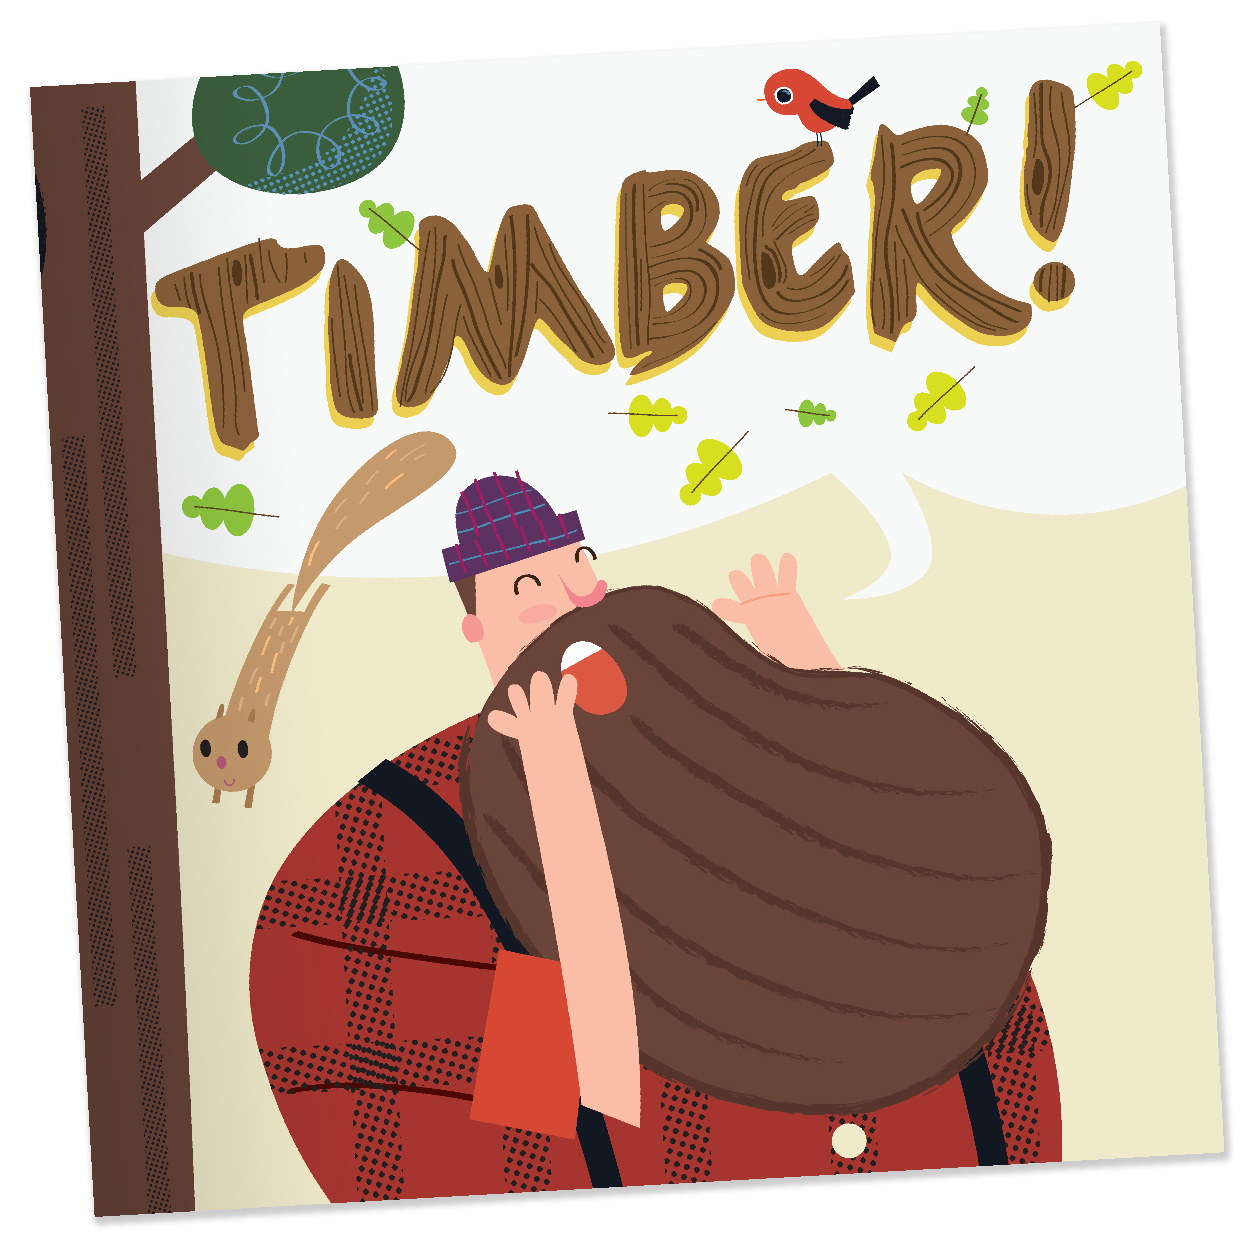 yelling timber